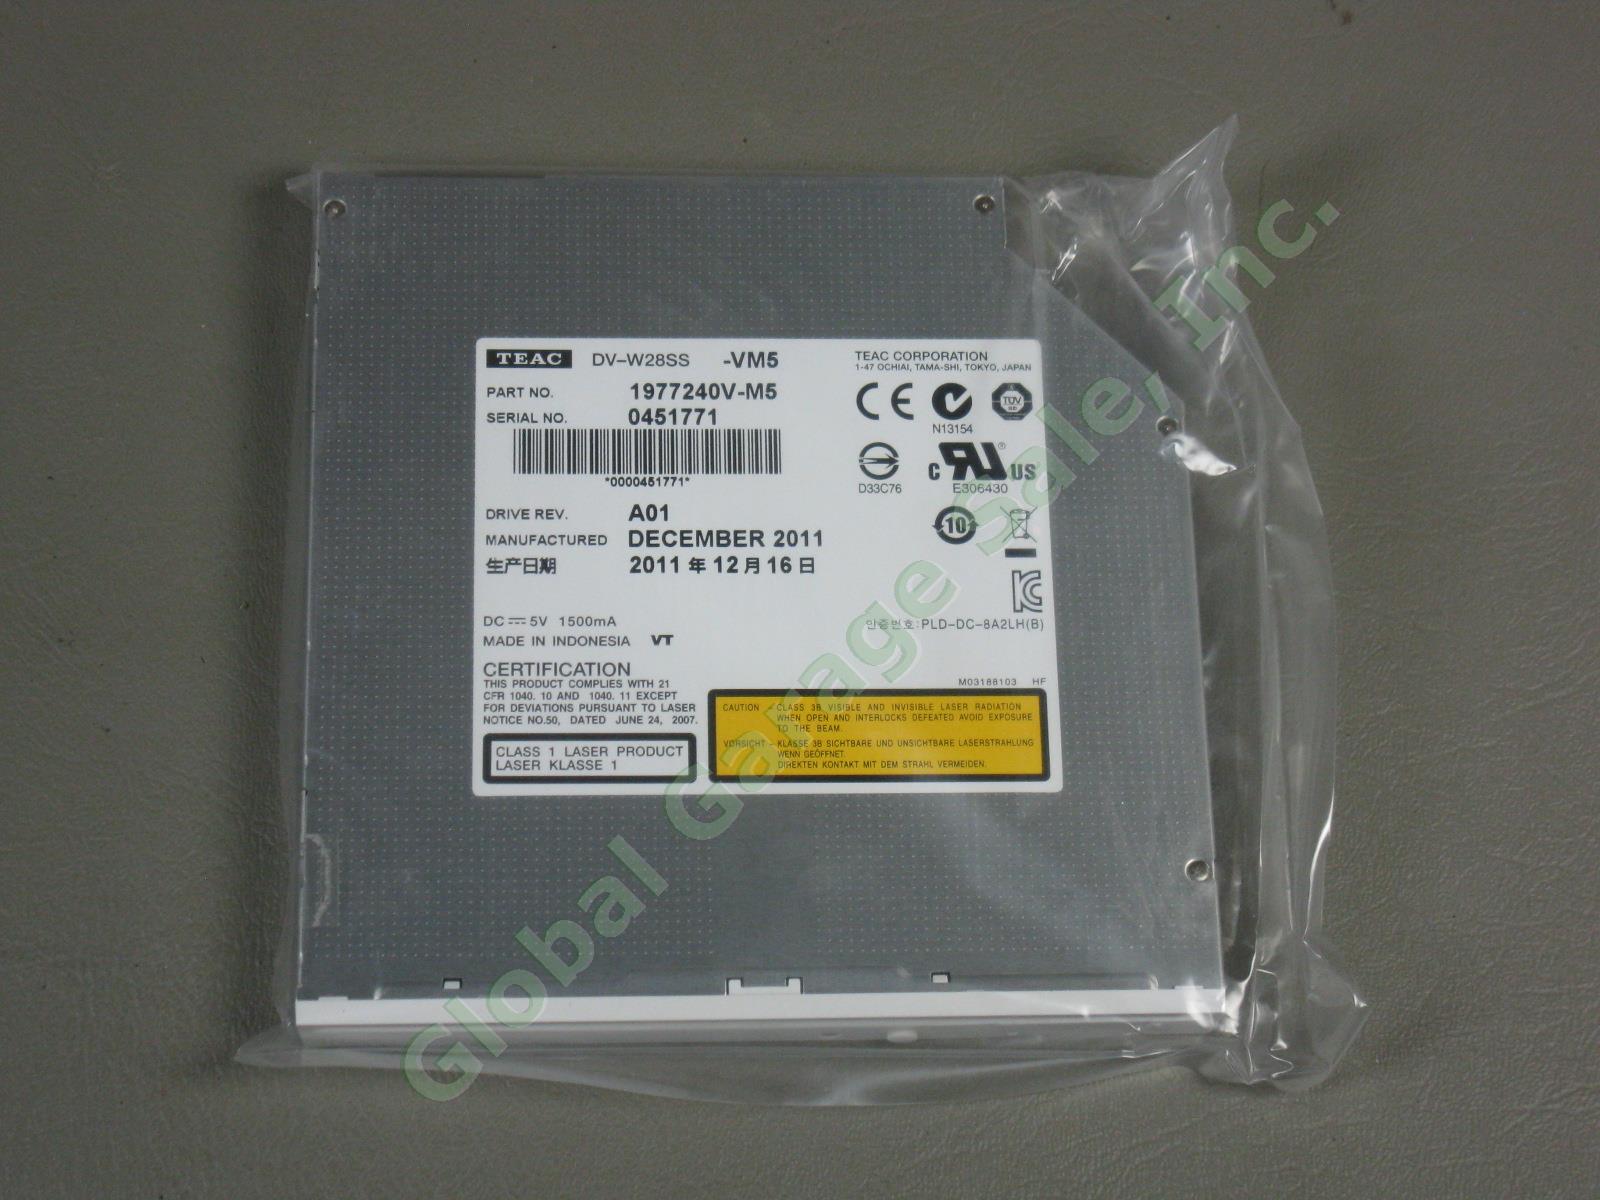 20 NEW Teac White DVD Writer Burner Player DV-W28SS-VM5 Slim Slot Load 12.7mm NR 3